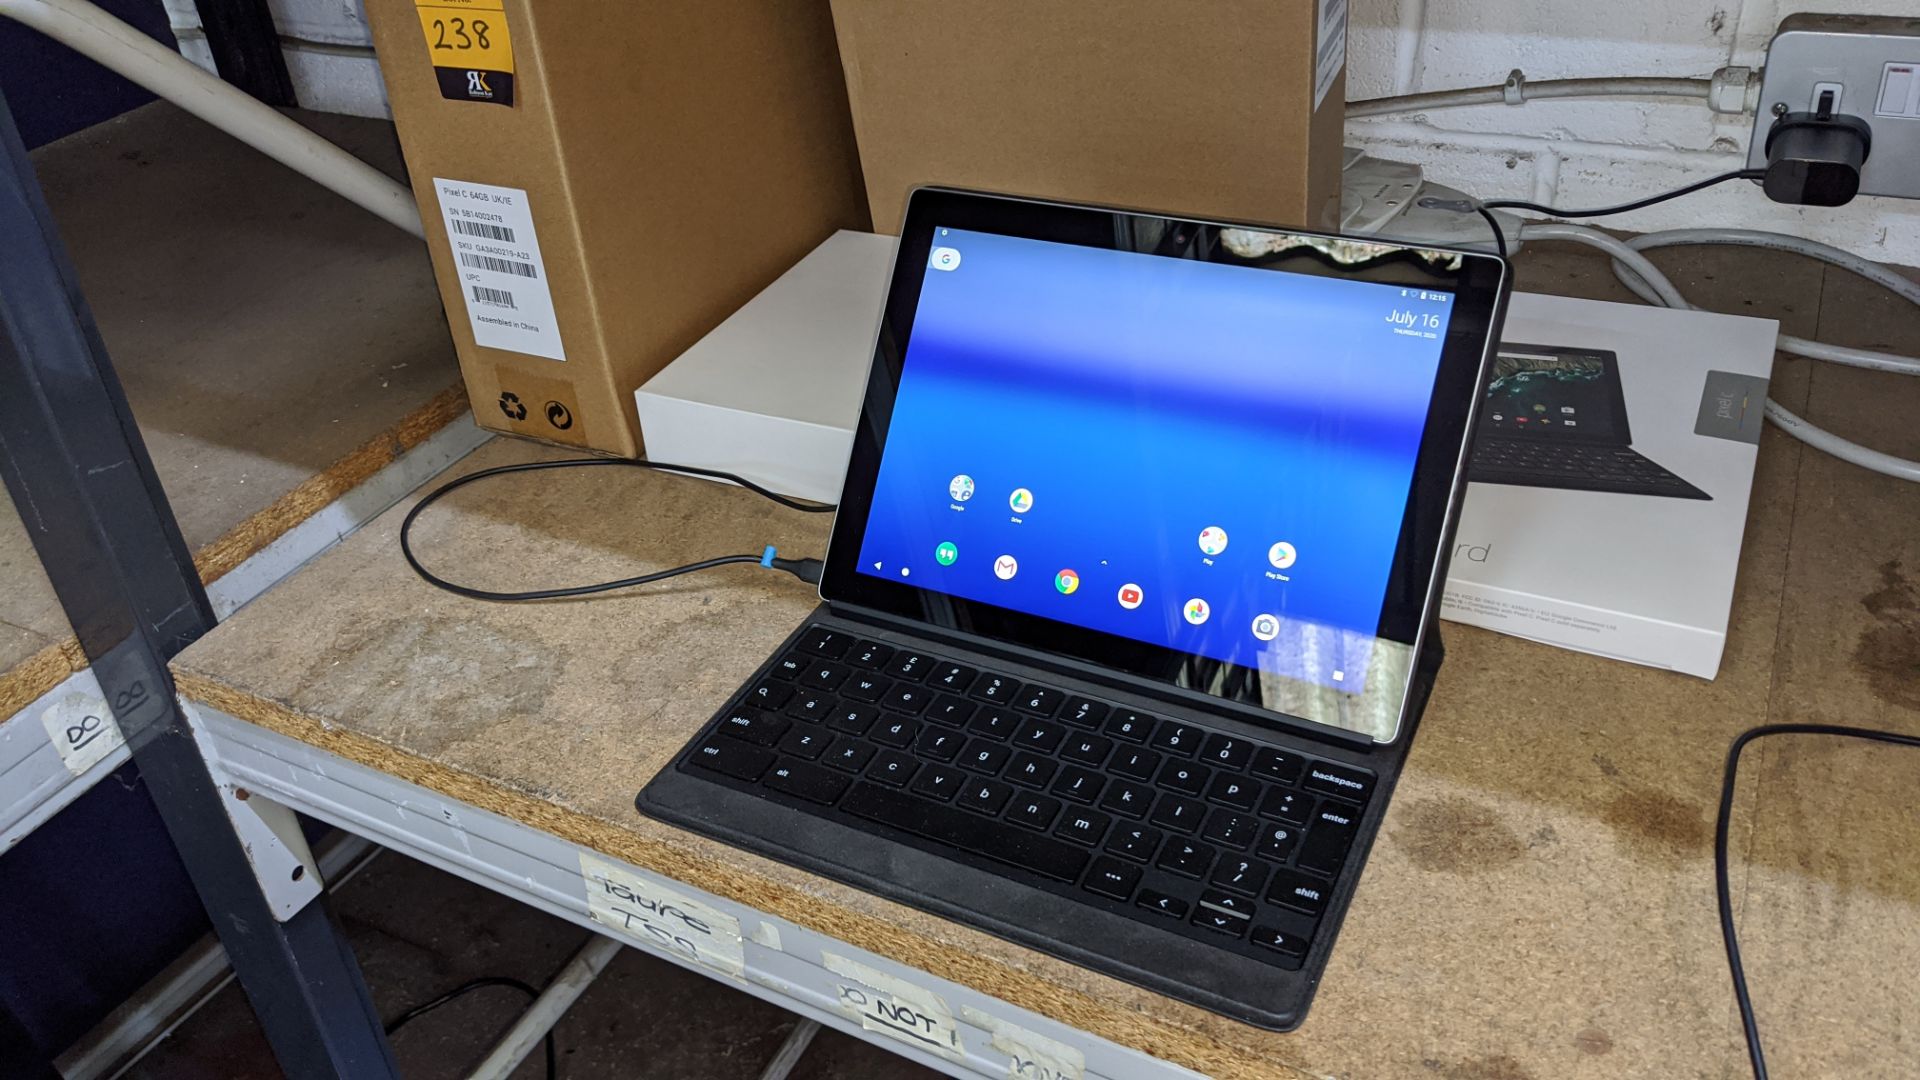 Google Pixel C 64GB tablet, 10.2", model C1502W, with optional Folio keyboard/case model UG1B. Incl